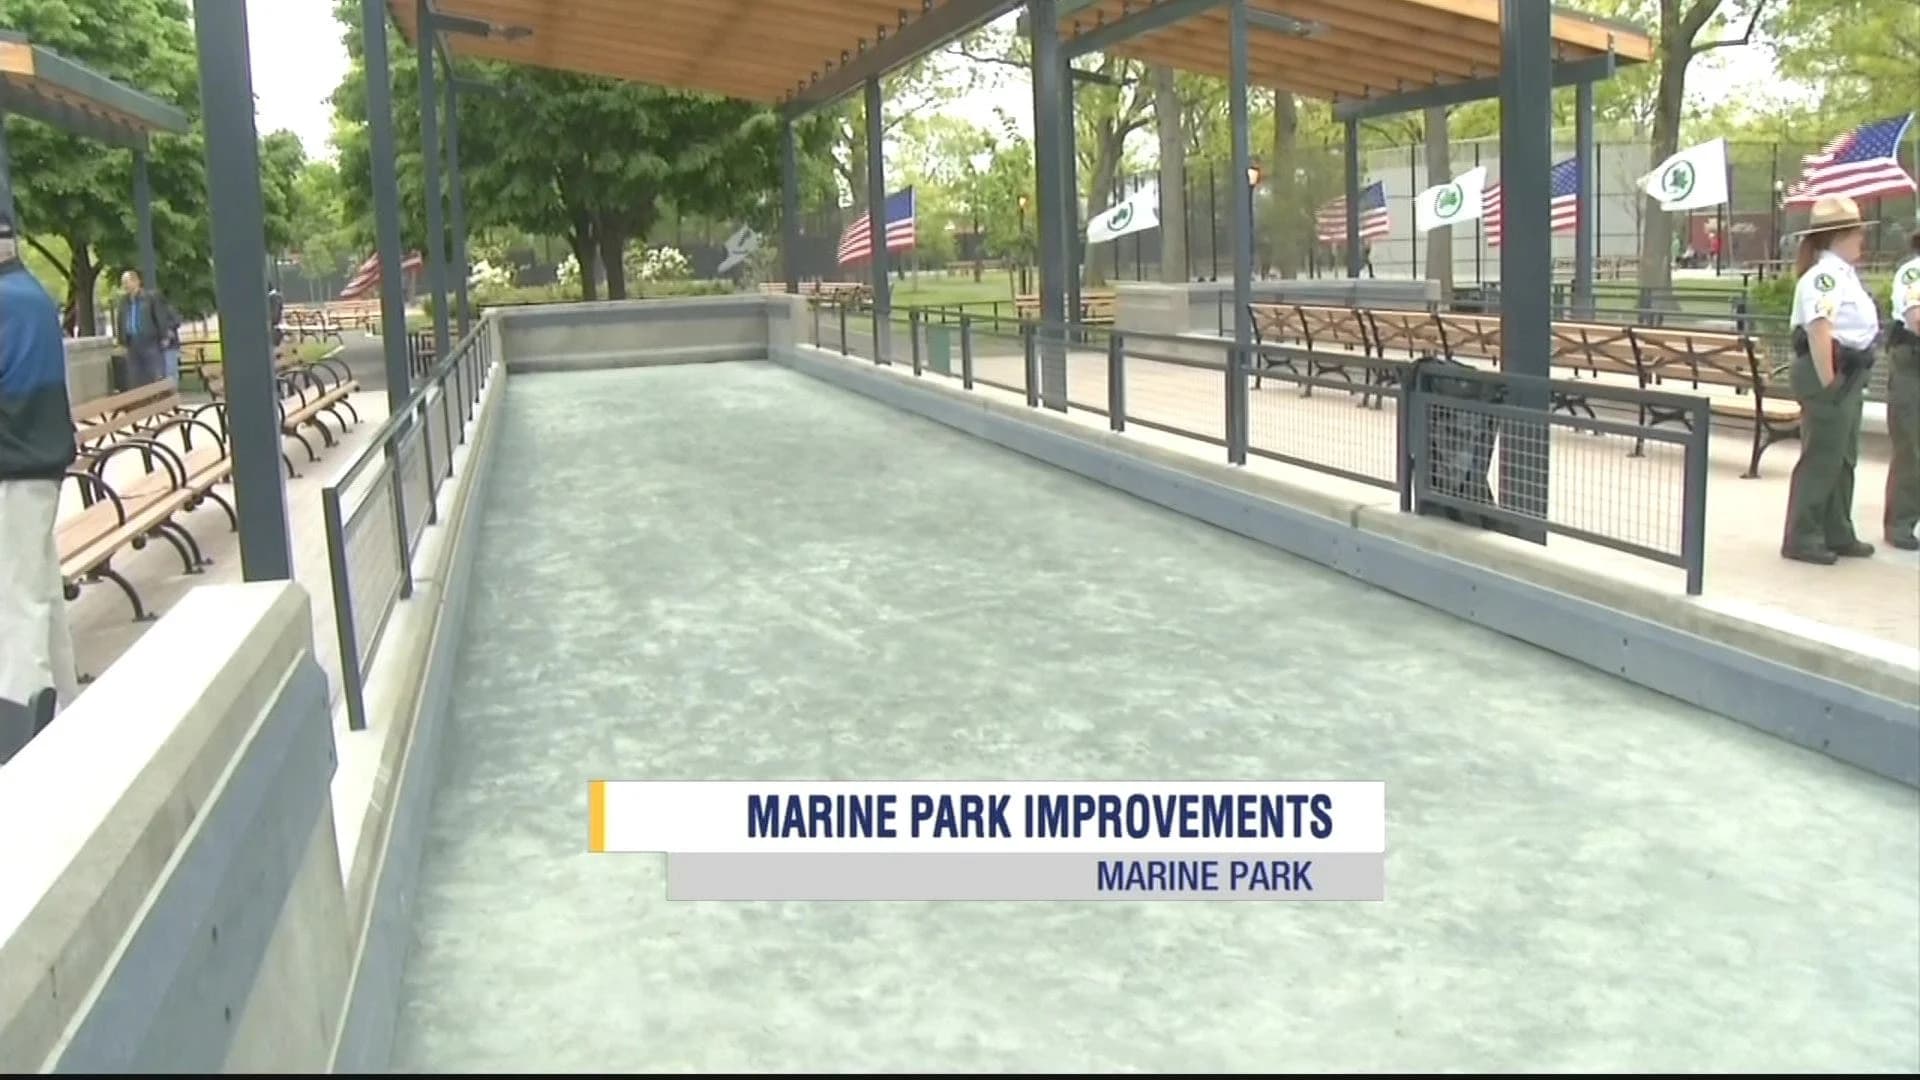 Bocce players rejoice at Marine Park improvements